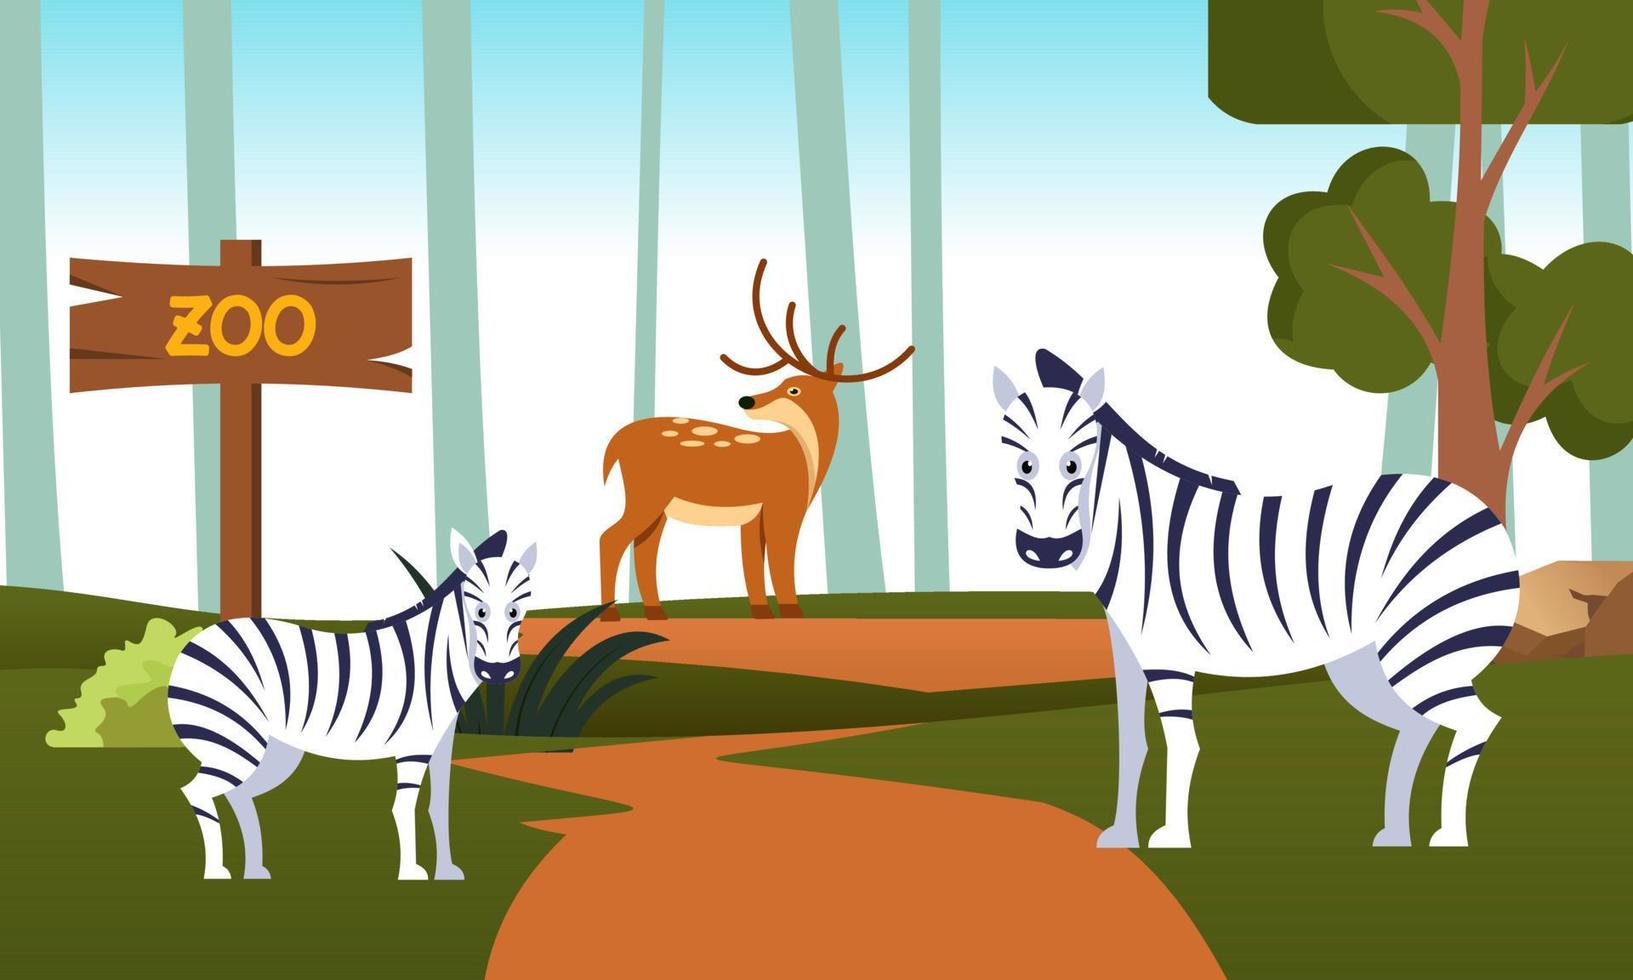 Zoo cartoon illustration with safari animals on forest background vector